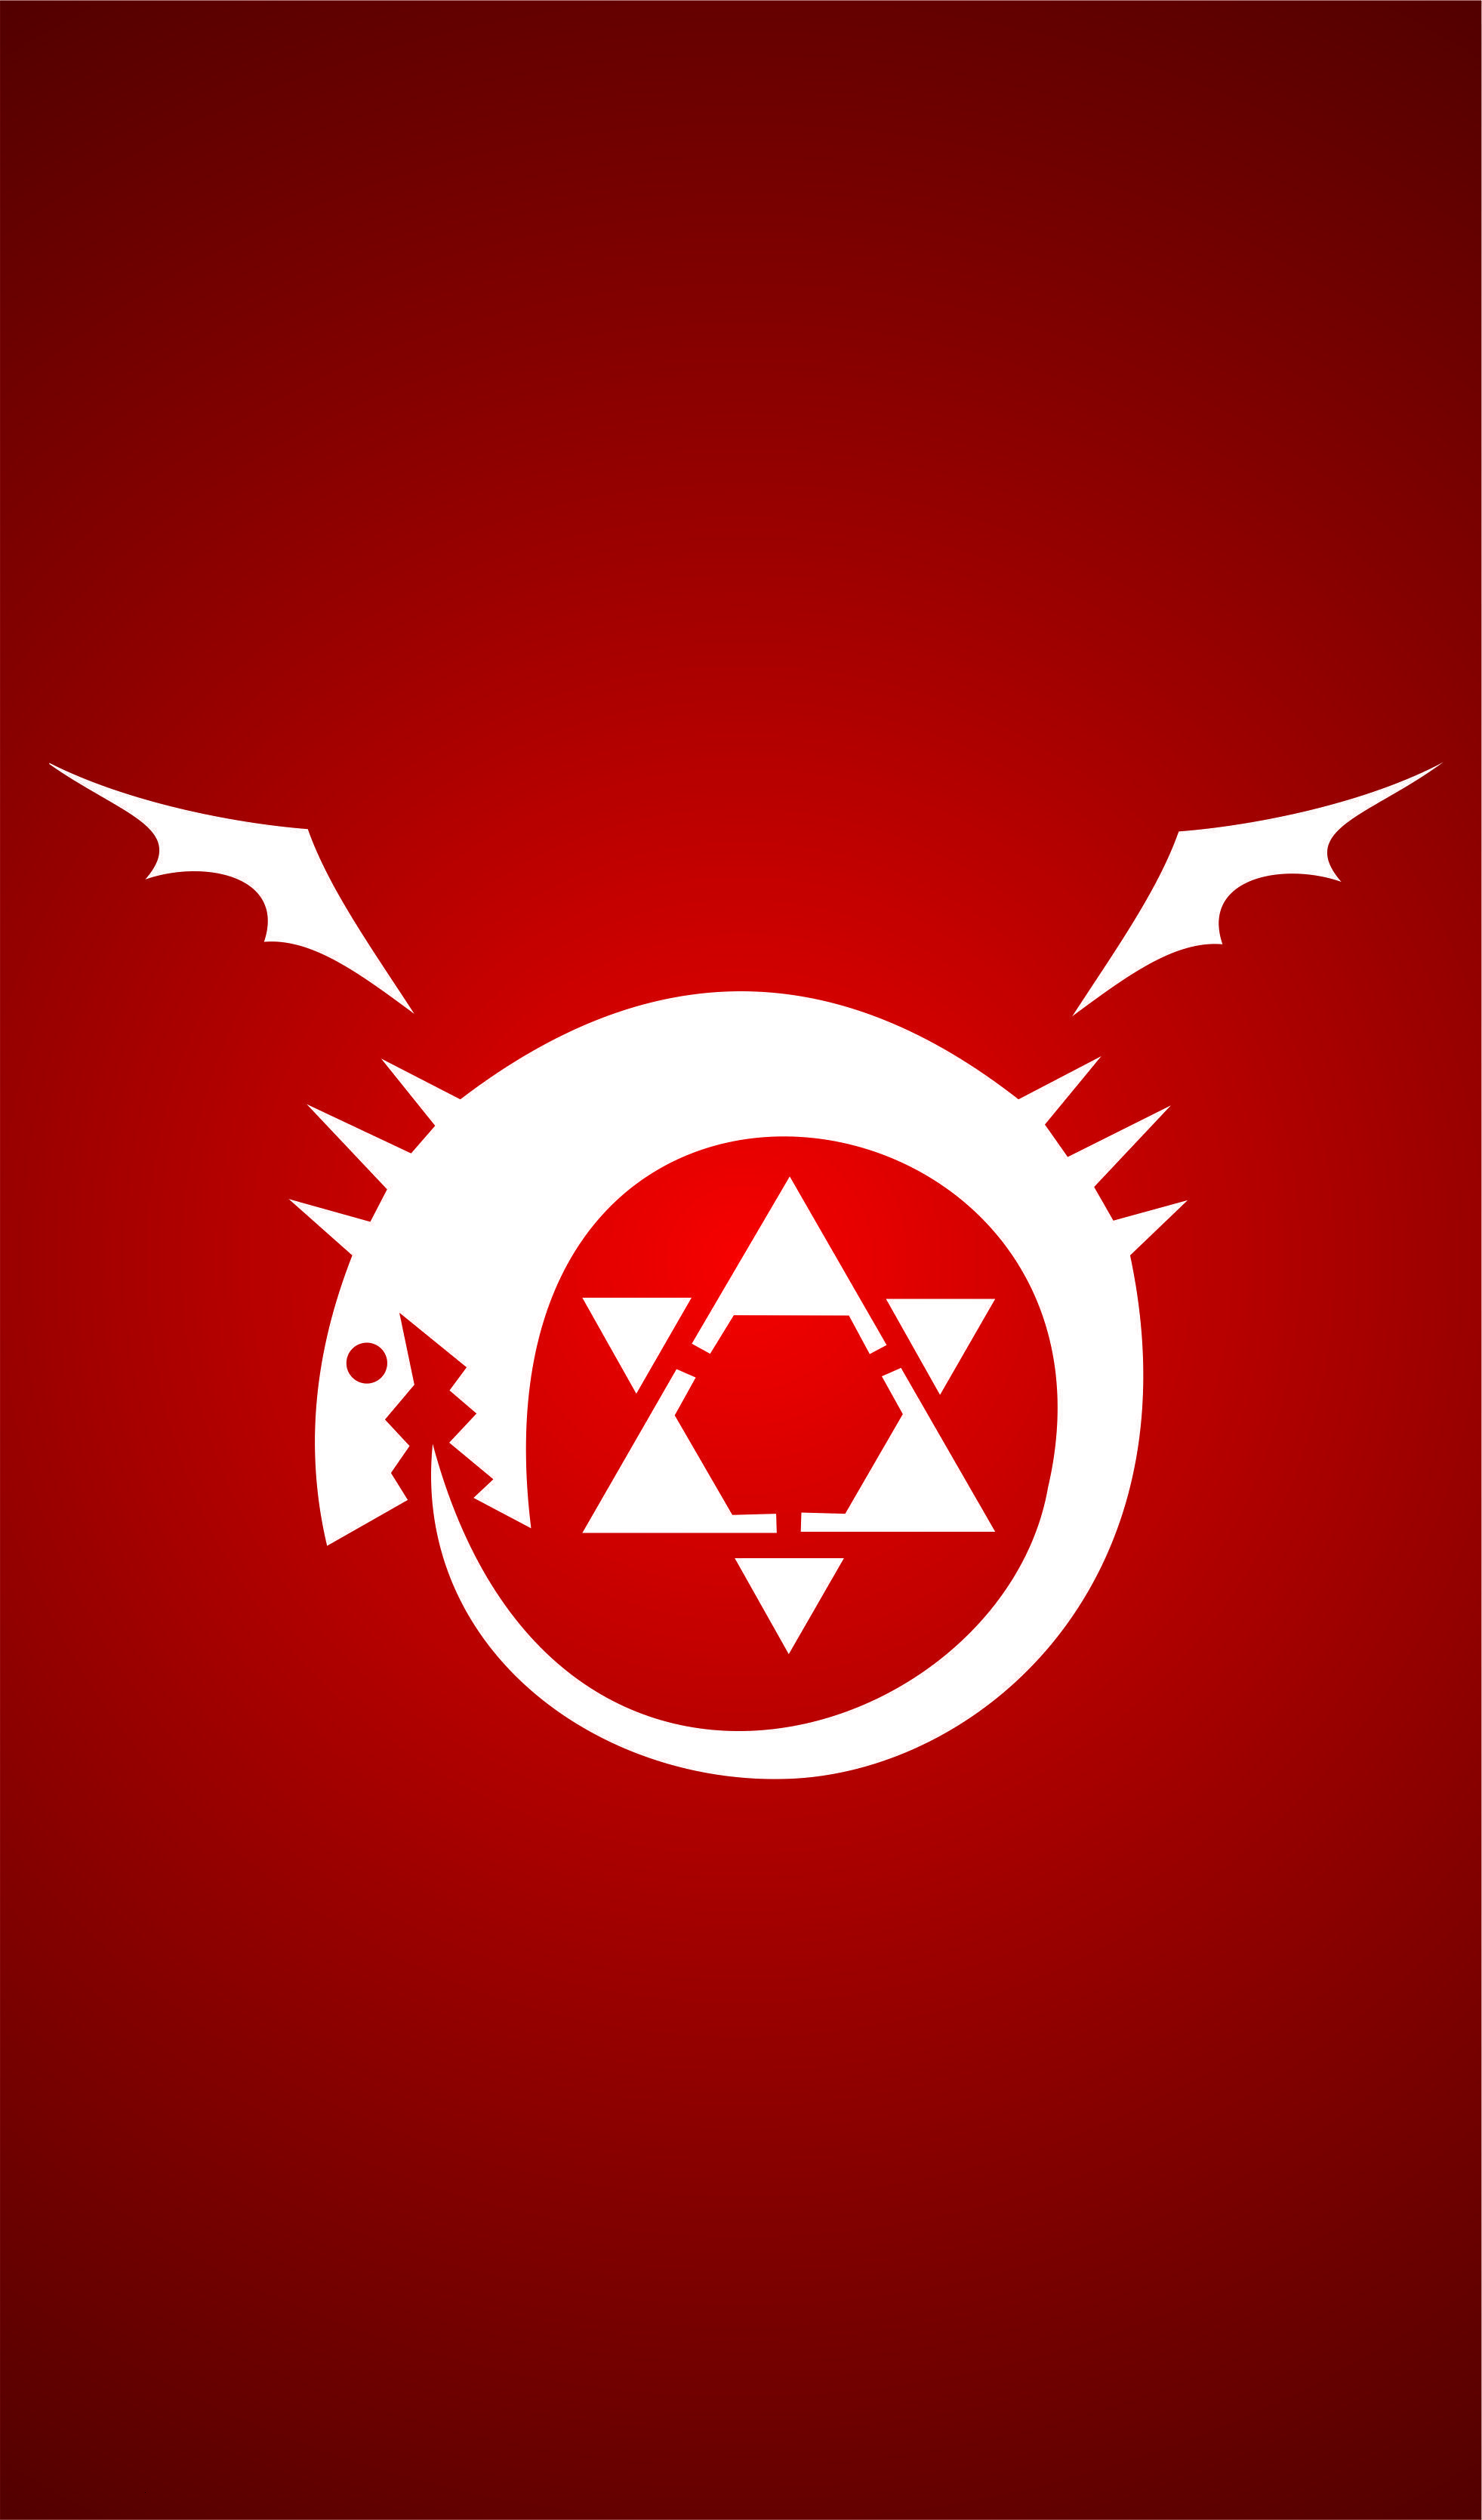 Fullmetal Alchemist Brotherhoodúnculo -Wallpaper iPhone